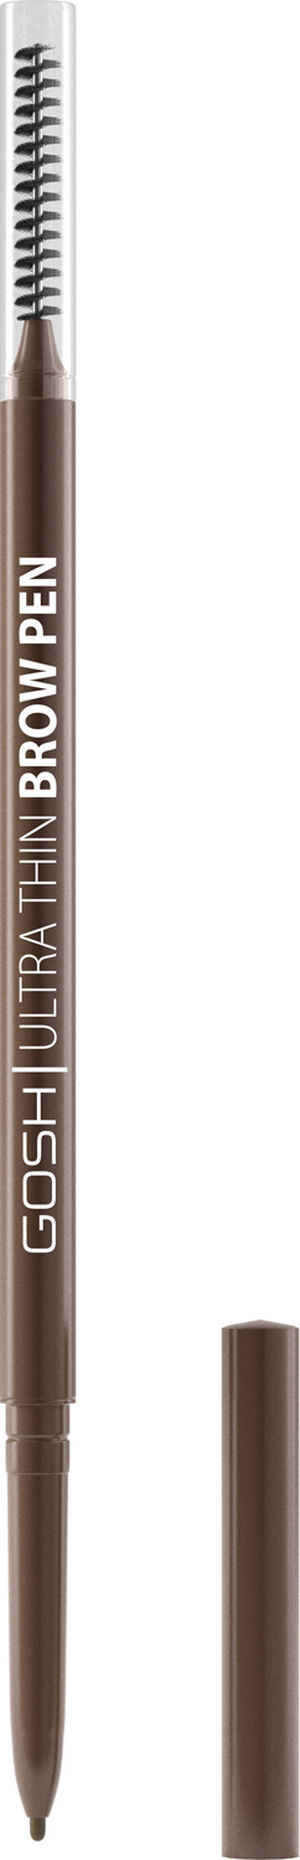 ULTRA THIN BROW PEN 4 g